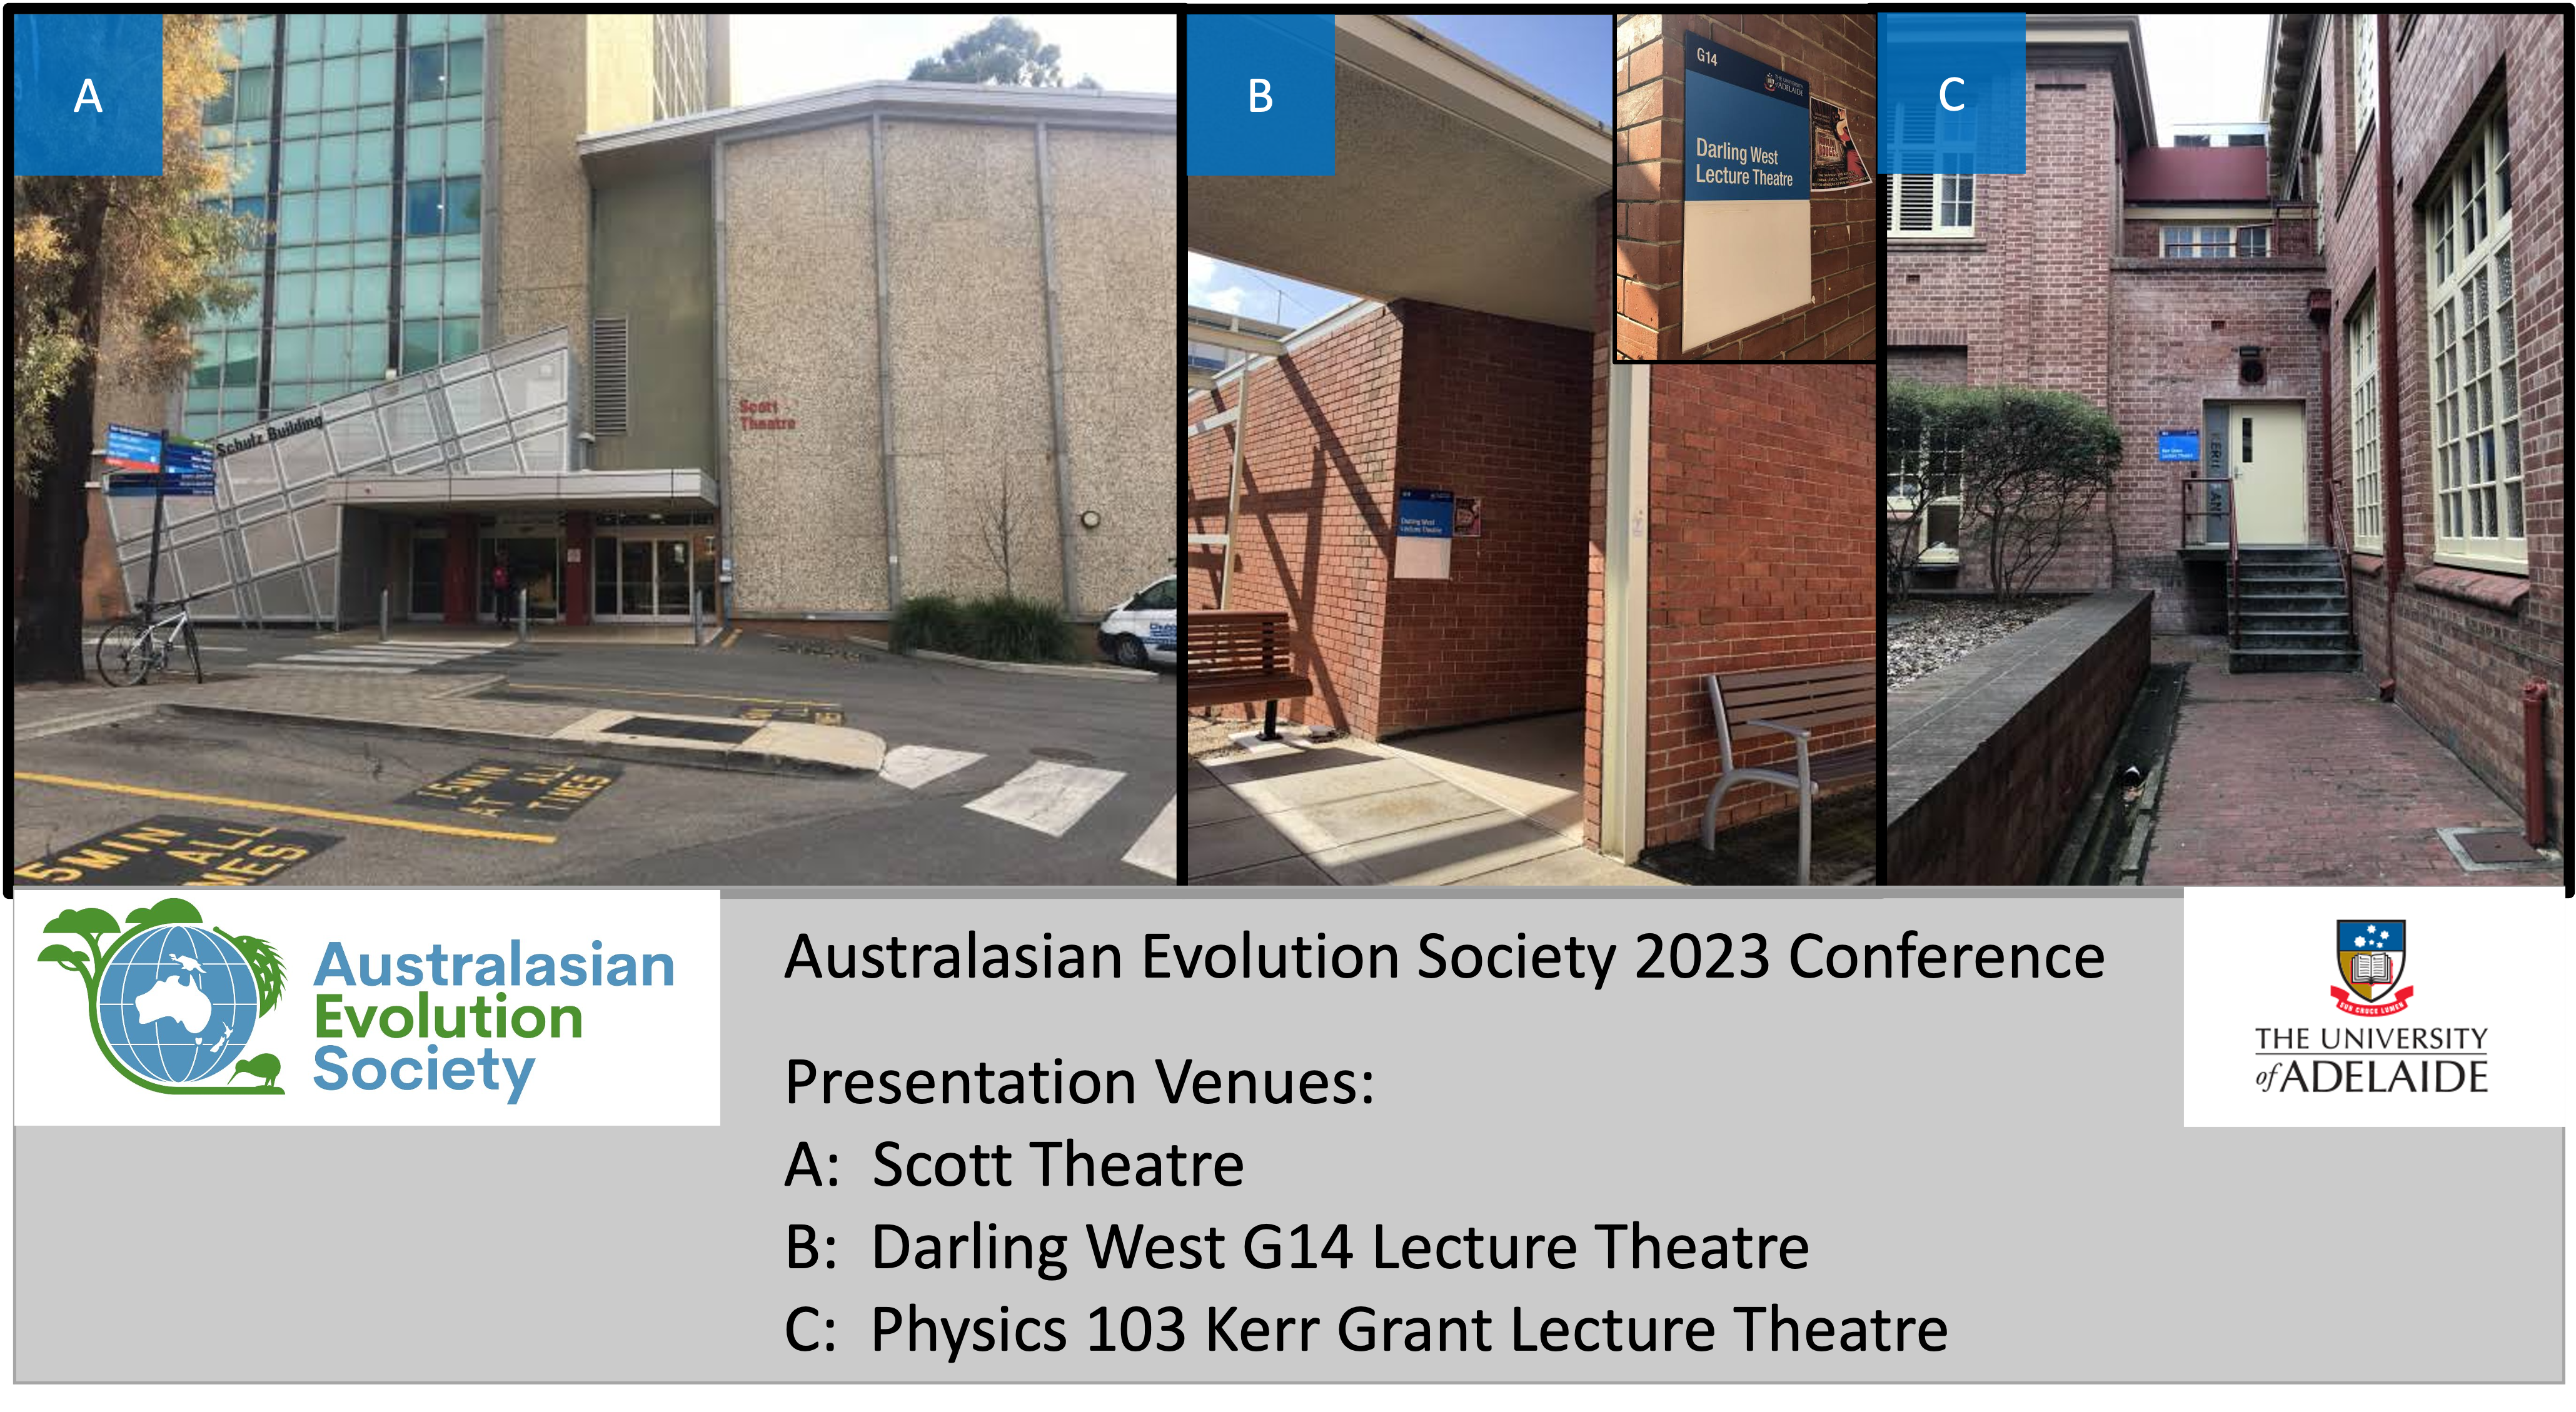 Presentation venues